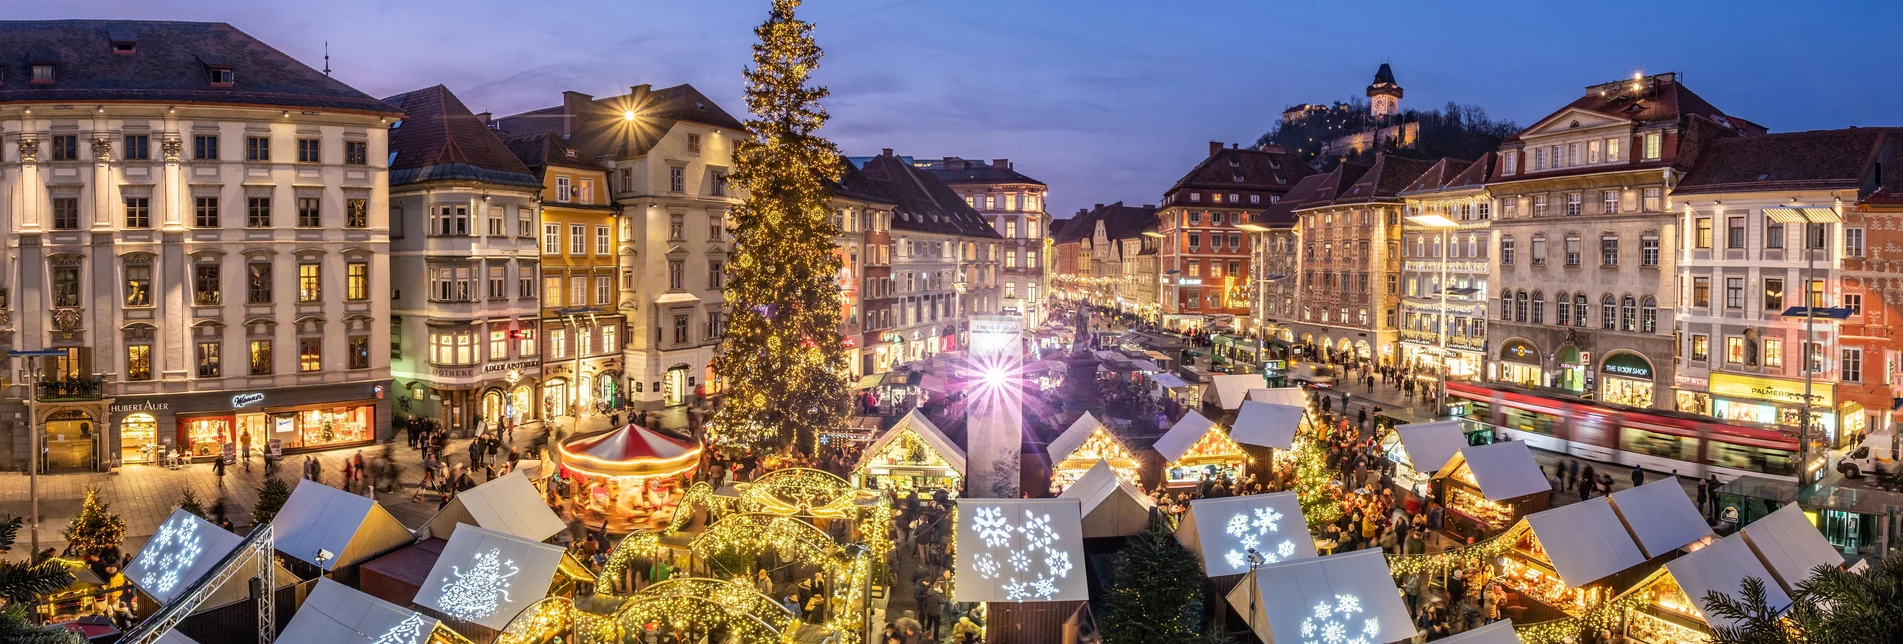 Advent market in Graz | © Graz Tourismus | Rene Walter